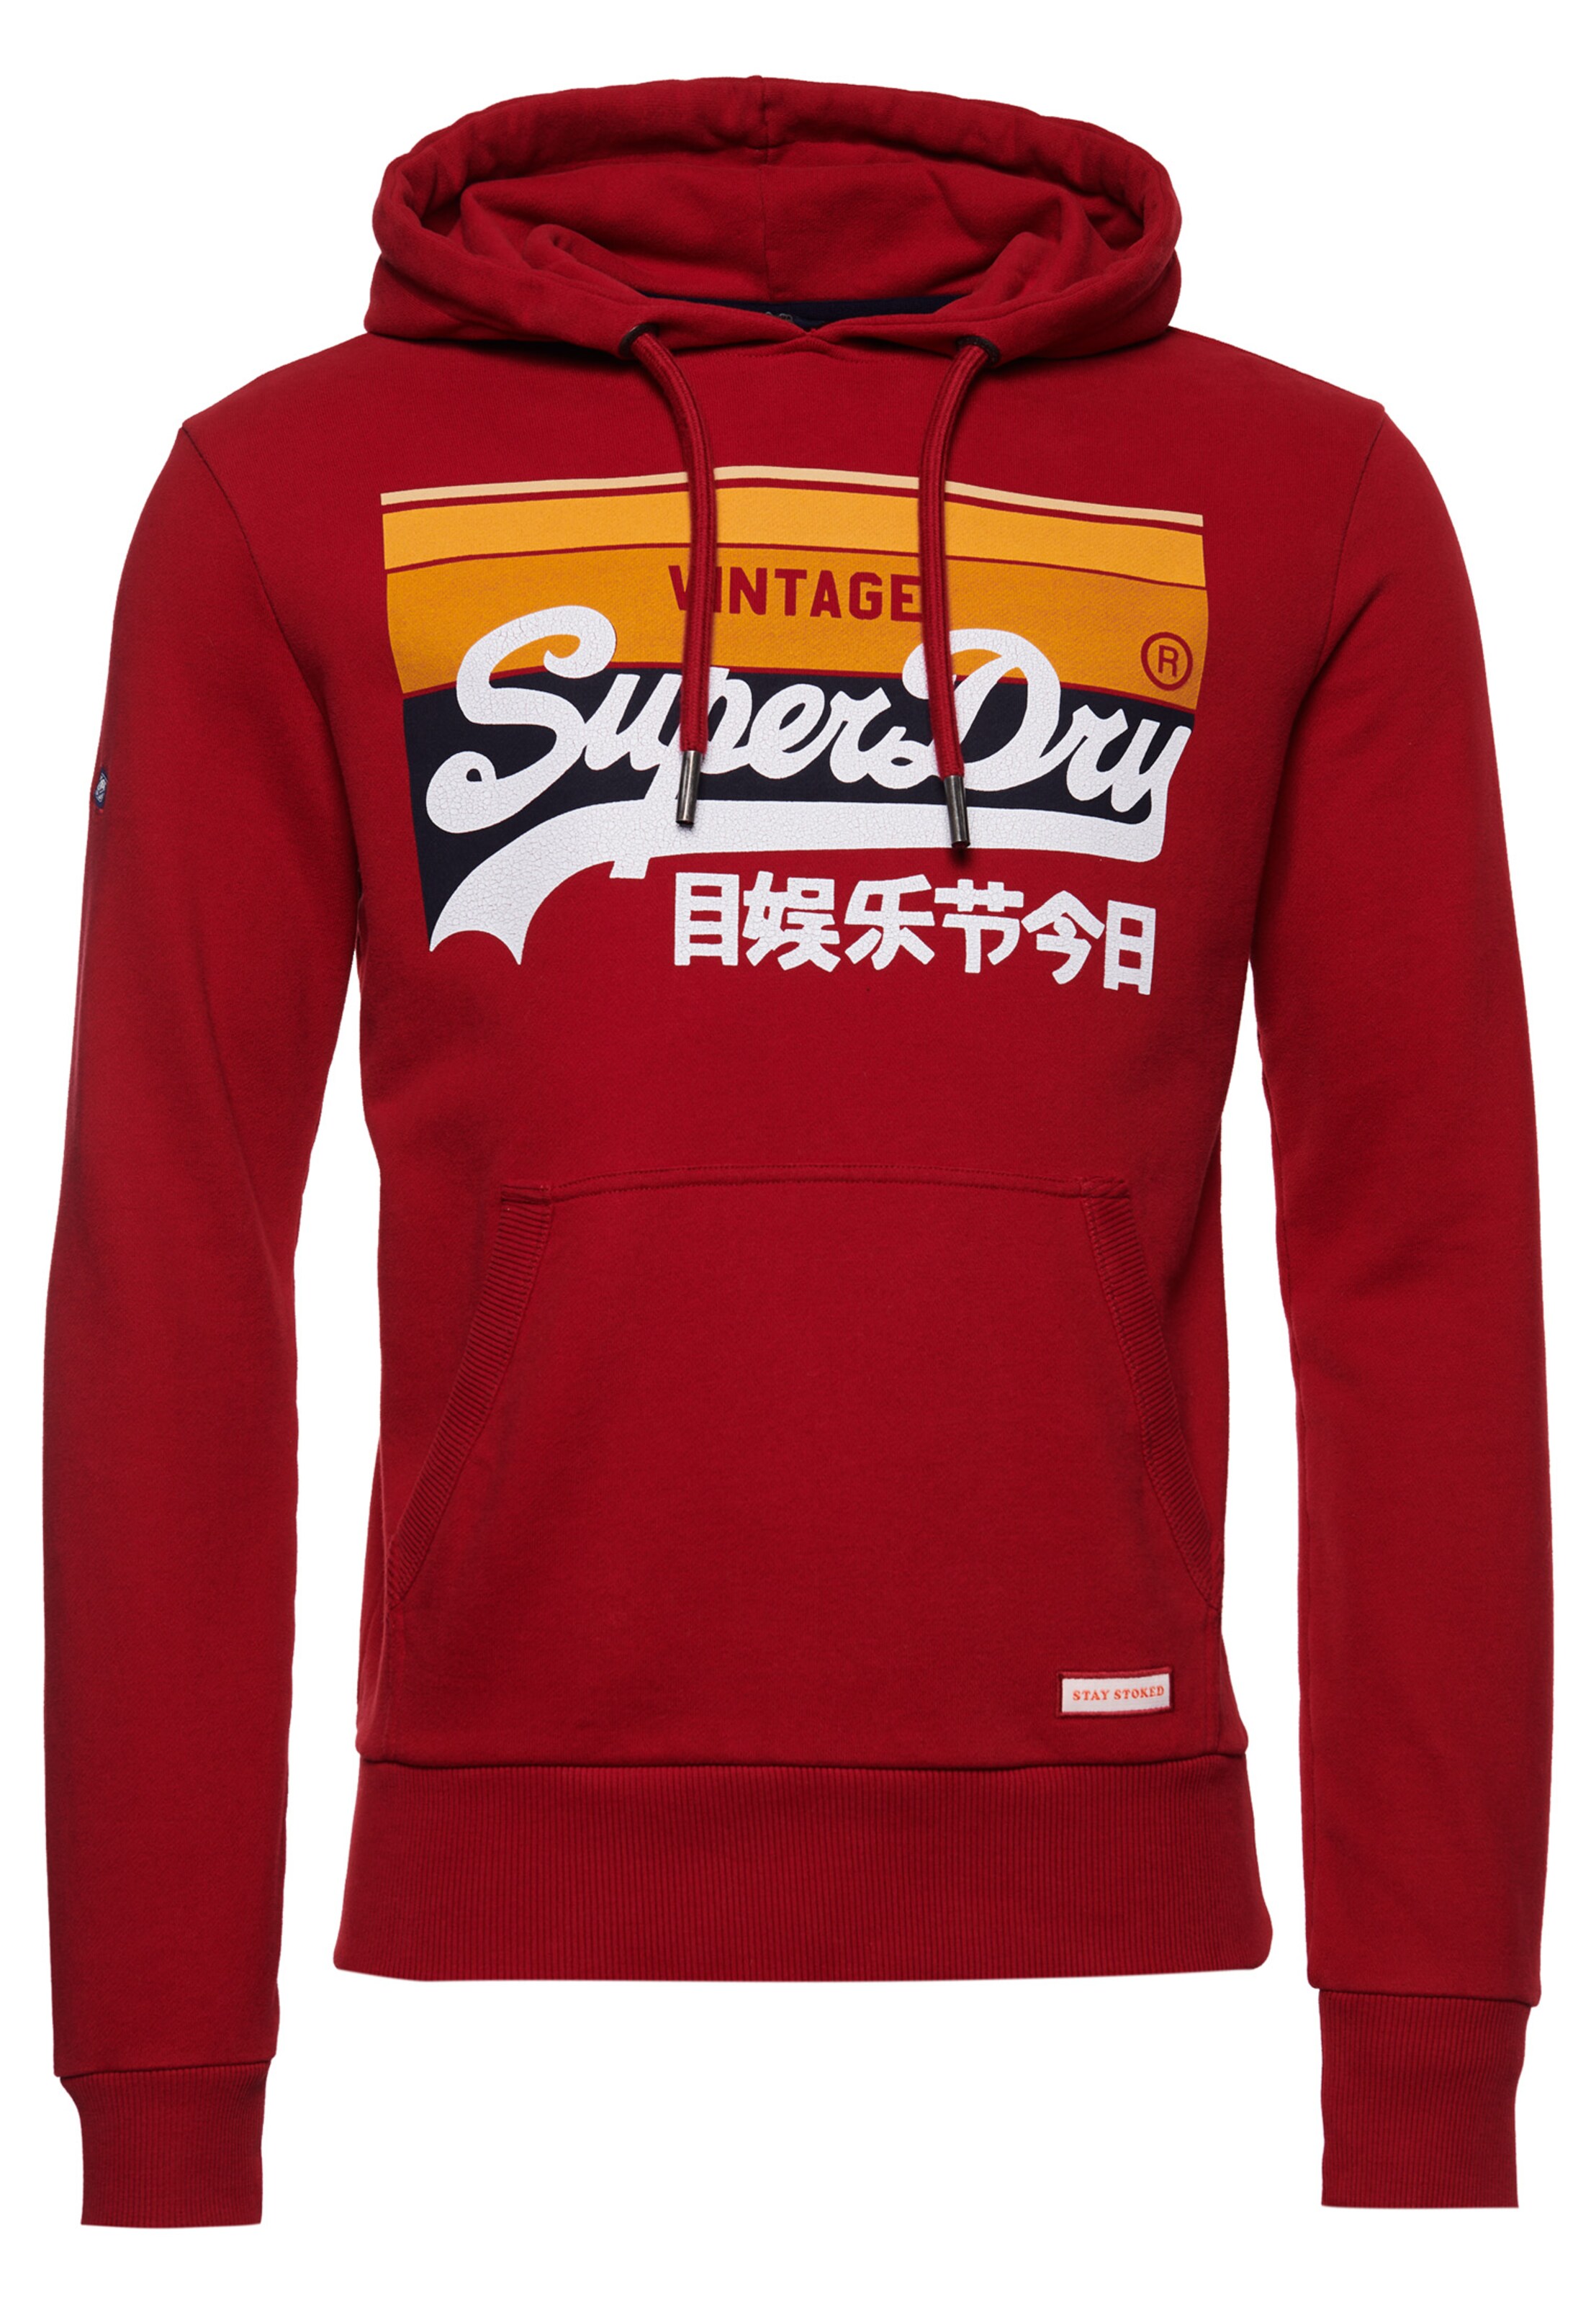 Männer Sportarten Superdry Sweatshirt in Dunkelrot - TA39544